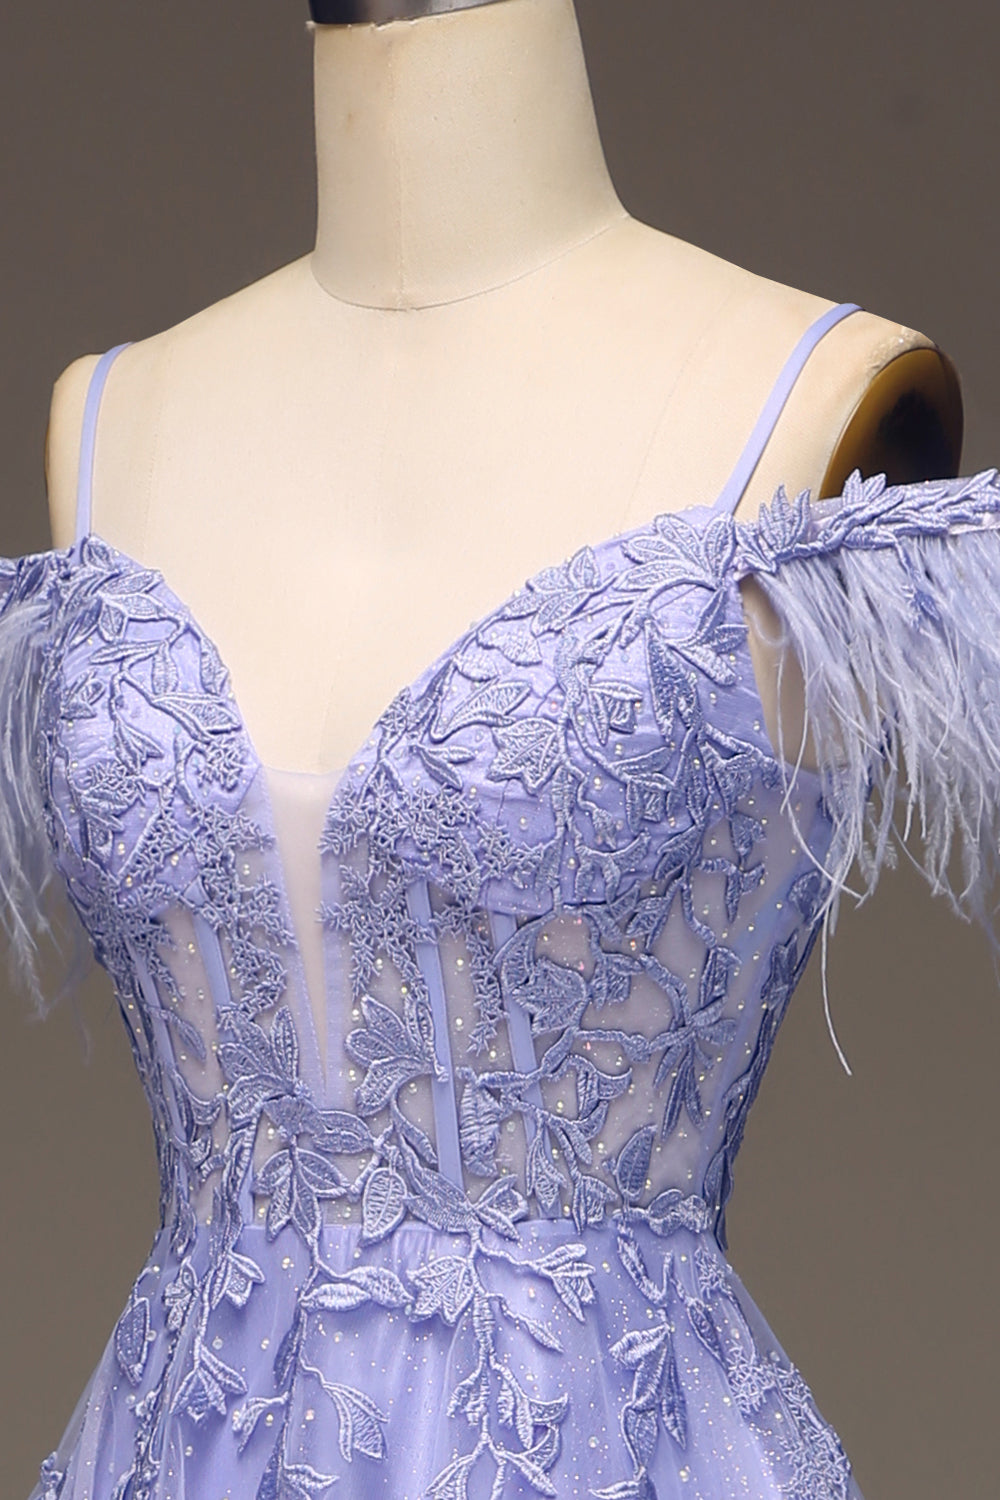 A-Line Cold Shoulder Lilac Corset Prom Dress with Appliques